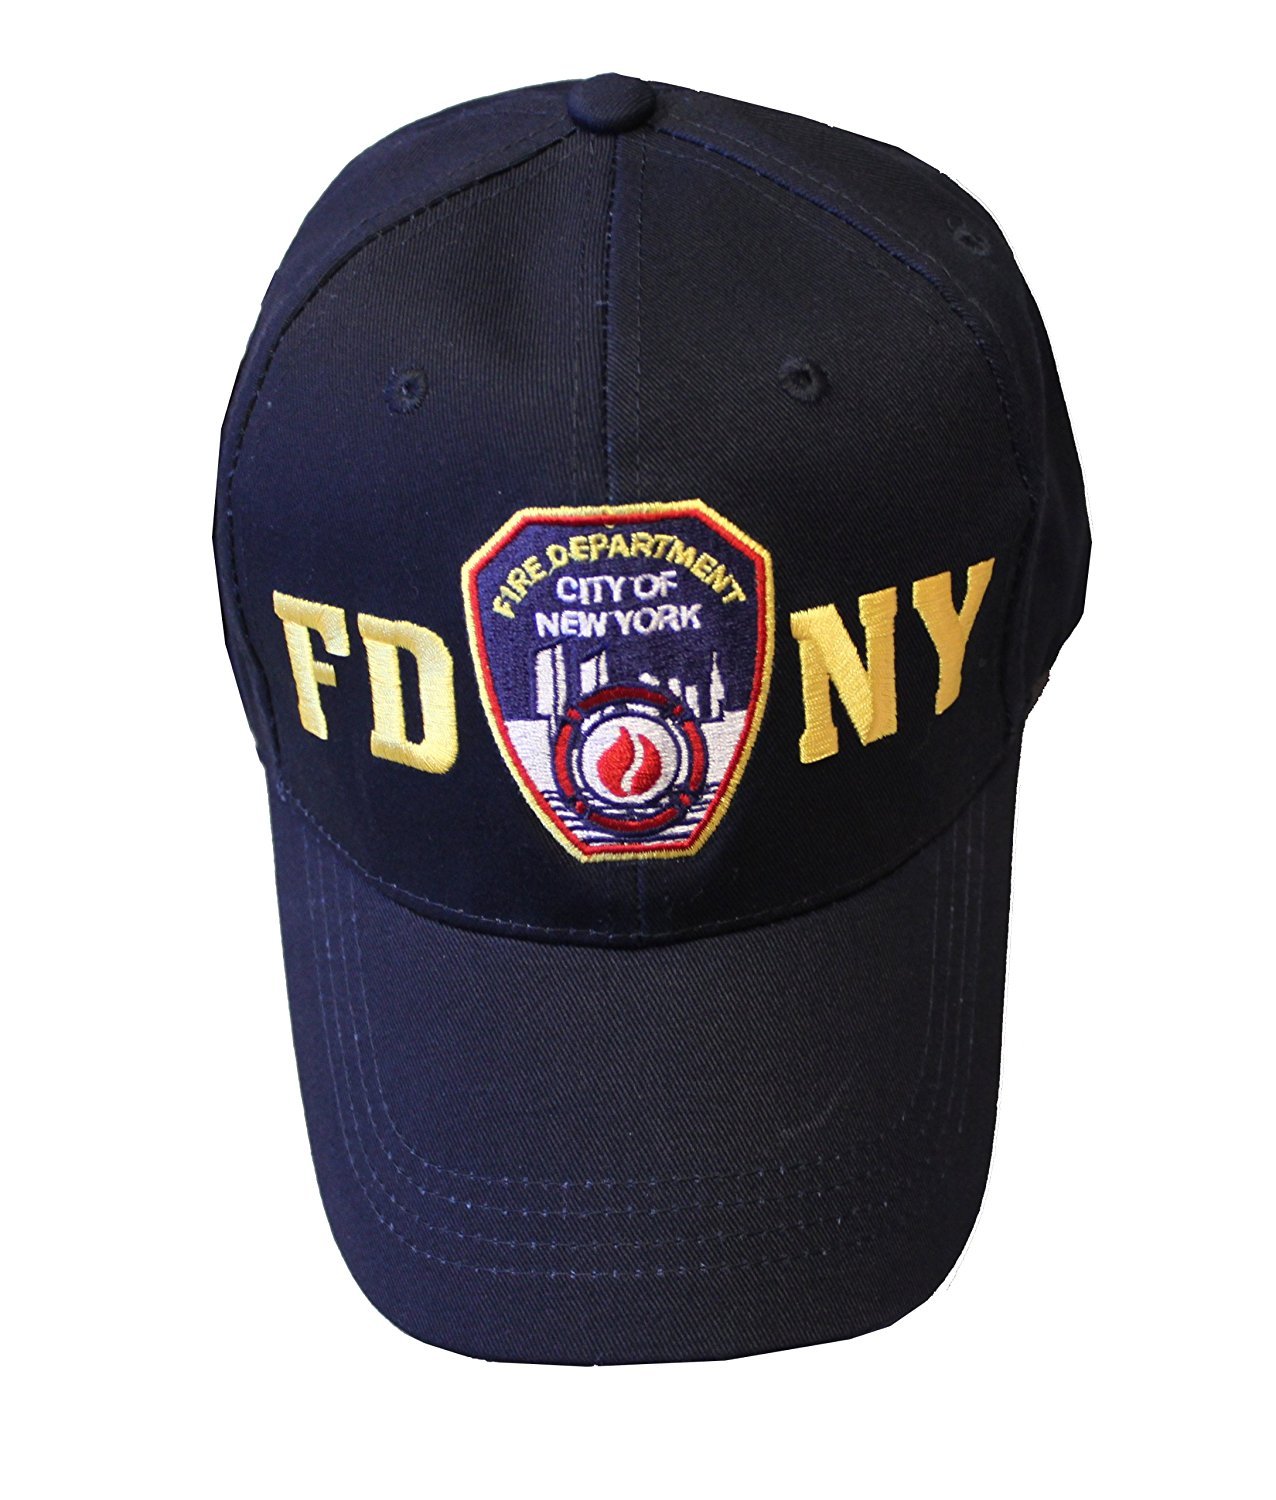 FDNY Junior Kinder Baseballmütze Fire Department of New York Marineblau Einheitsgröße